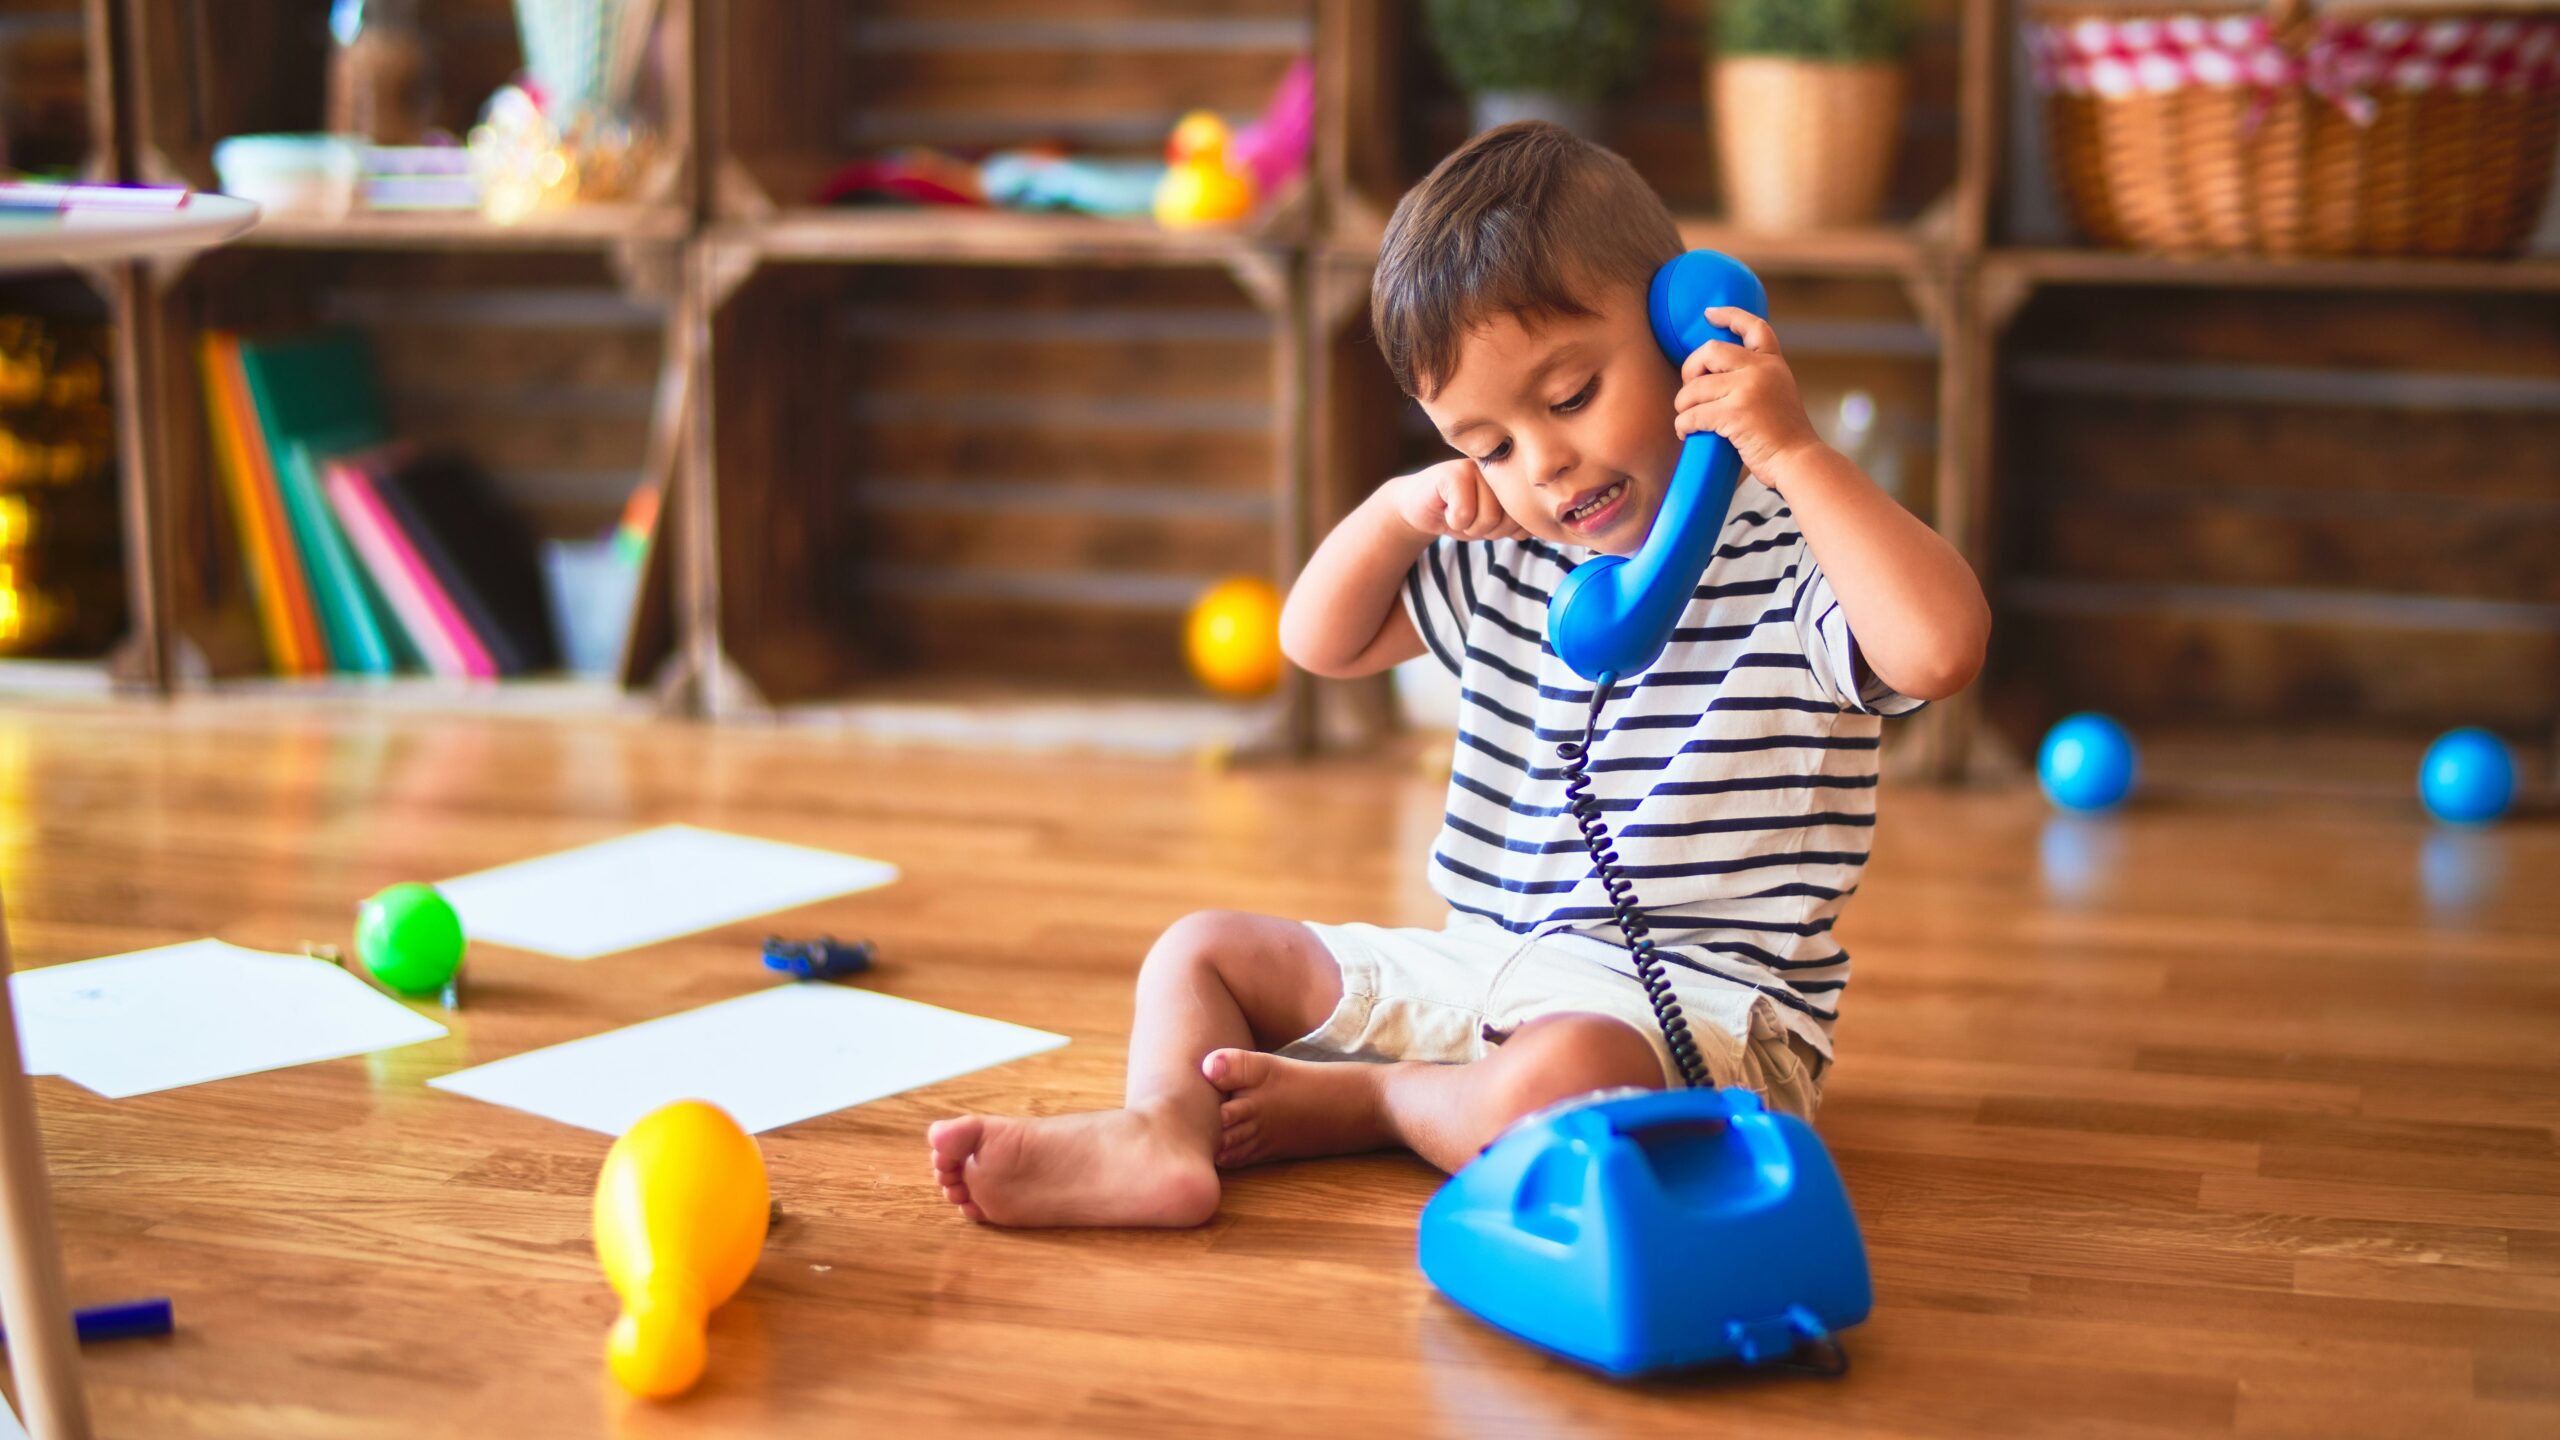 Preschool boy talks on pretend blue phone in classroom.